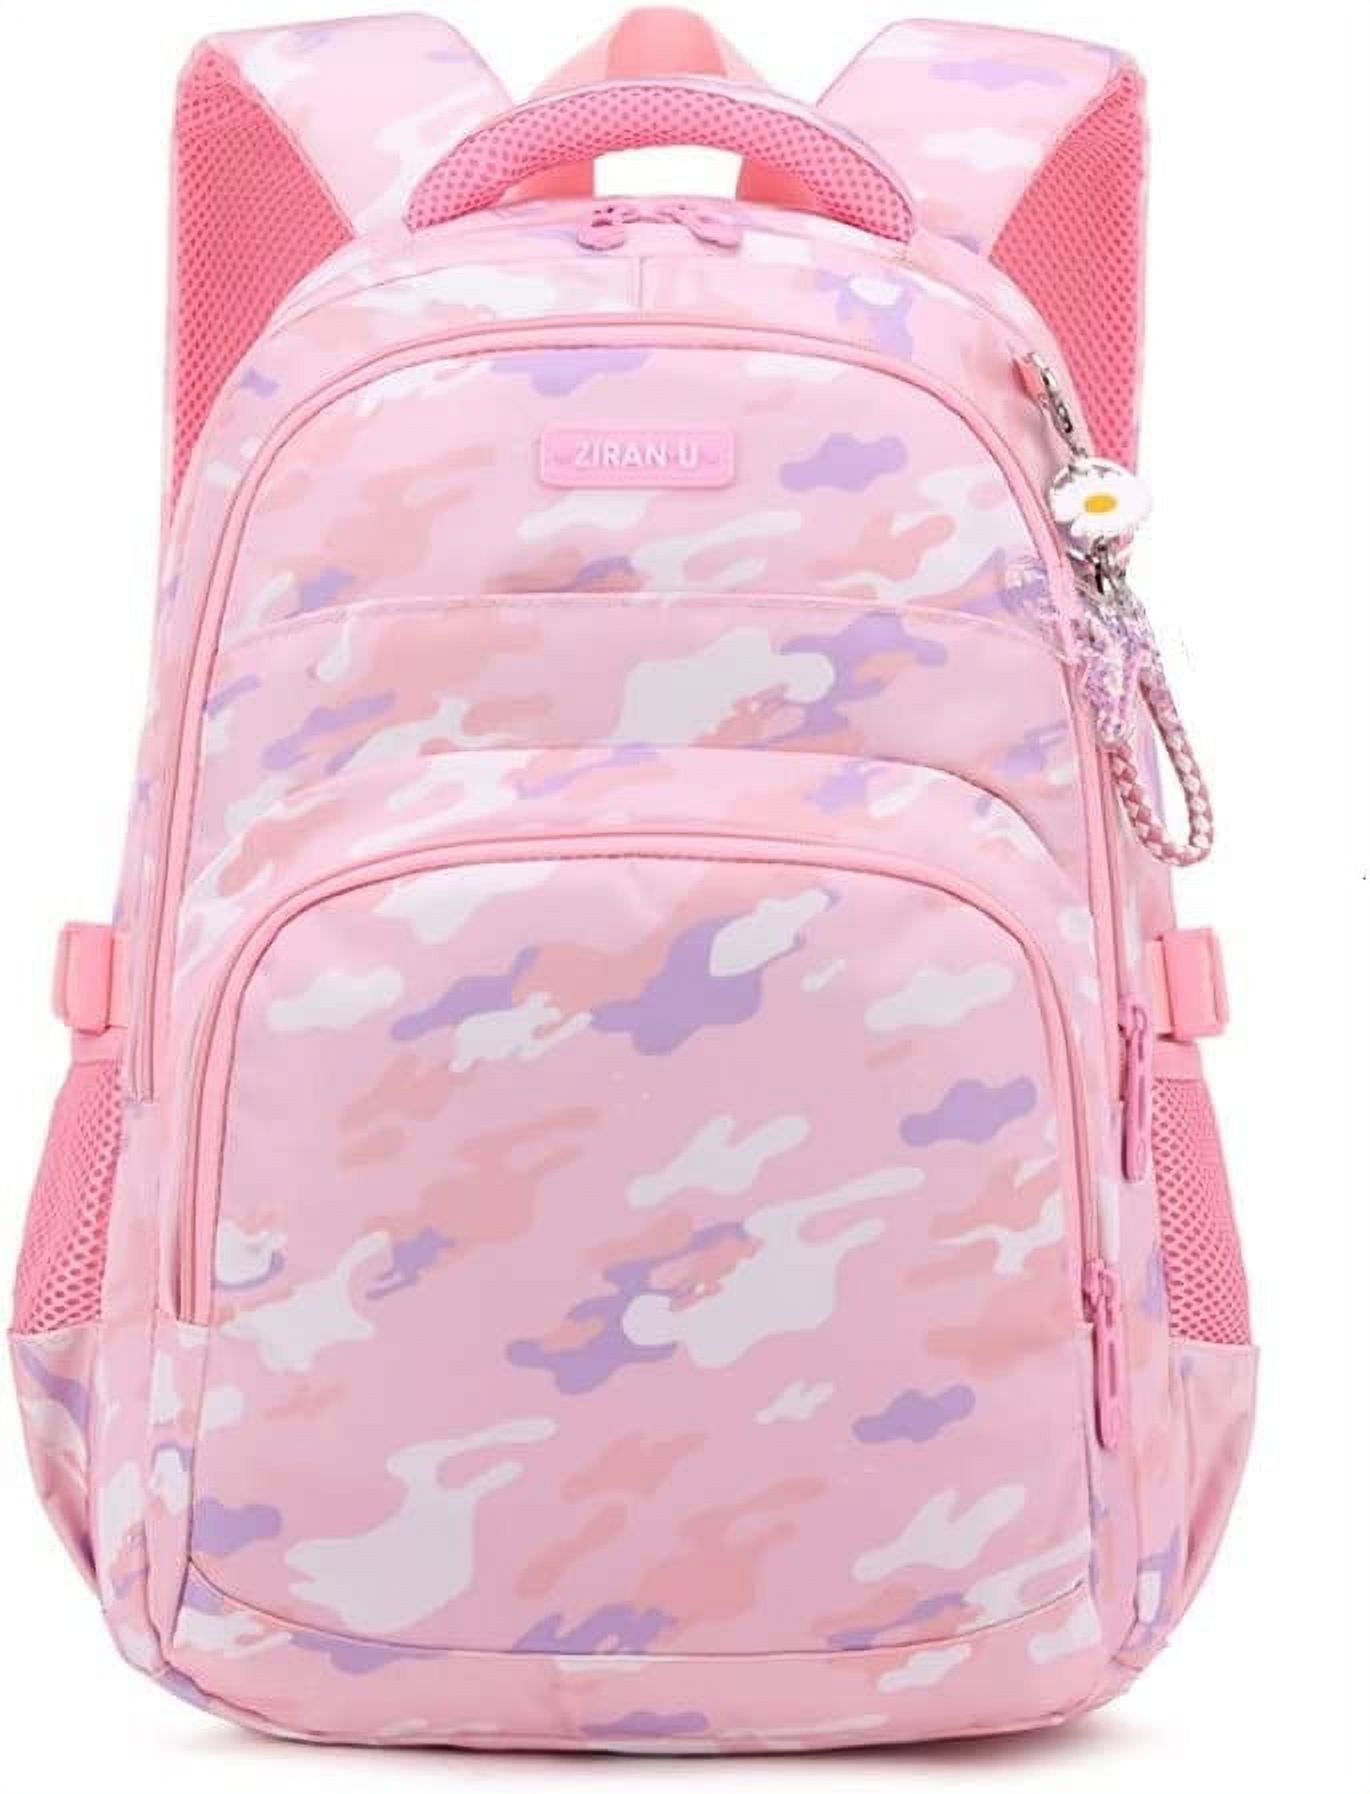 Jung kook printed bts pink bag, baby bag, college bags girls, bags